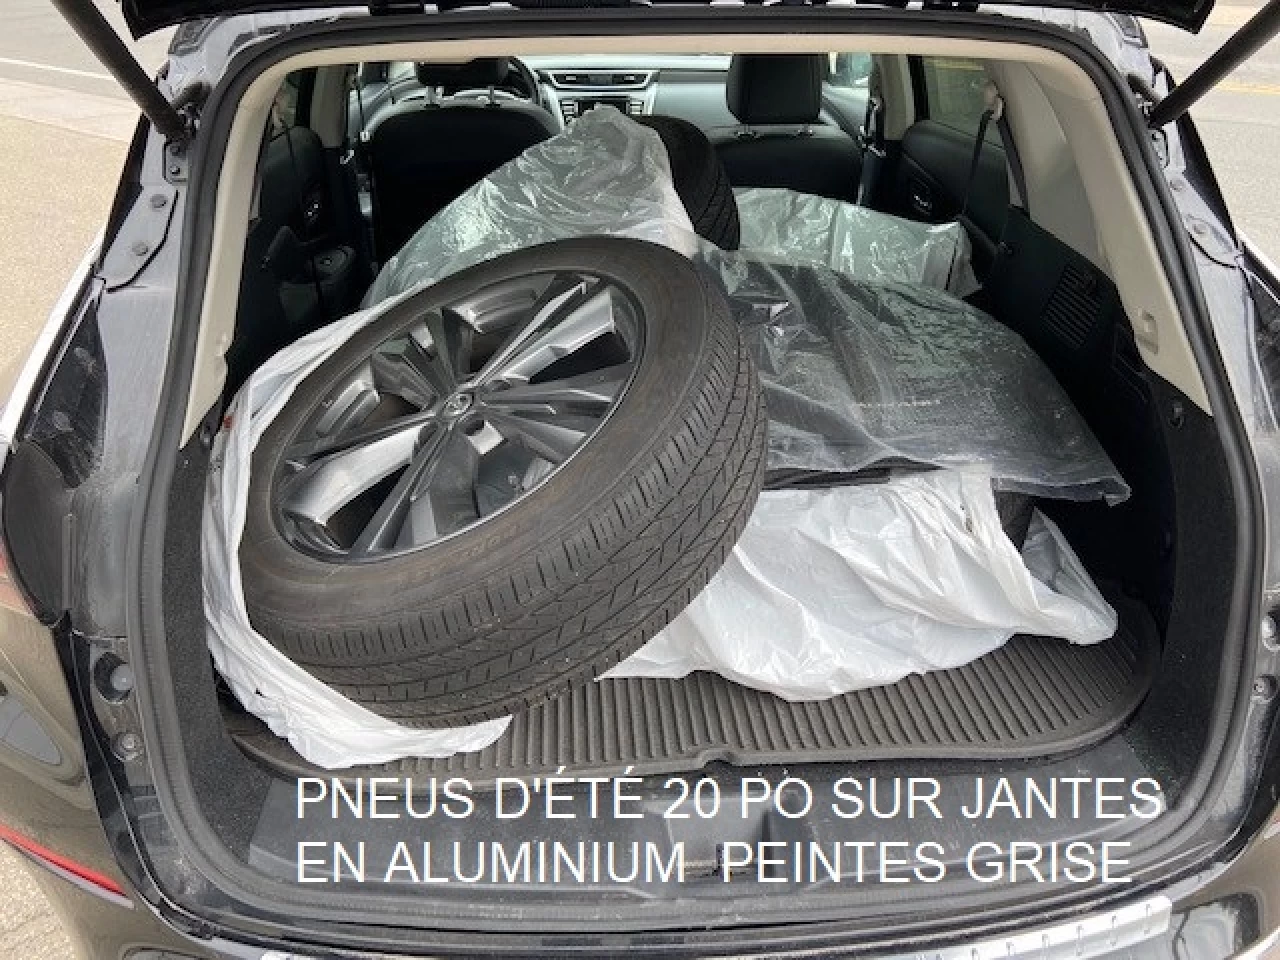 2019 Nissan Murano Platinum https://www.rejeanlaportelincoln.com/resize/b990ff35b810a3abc0cc817b2ca24889-1